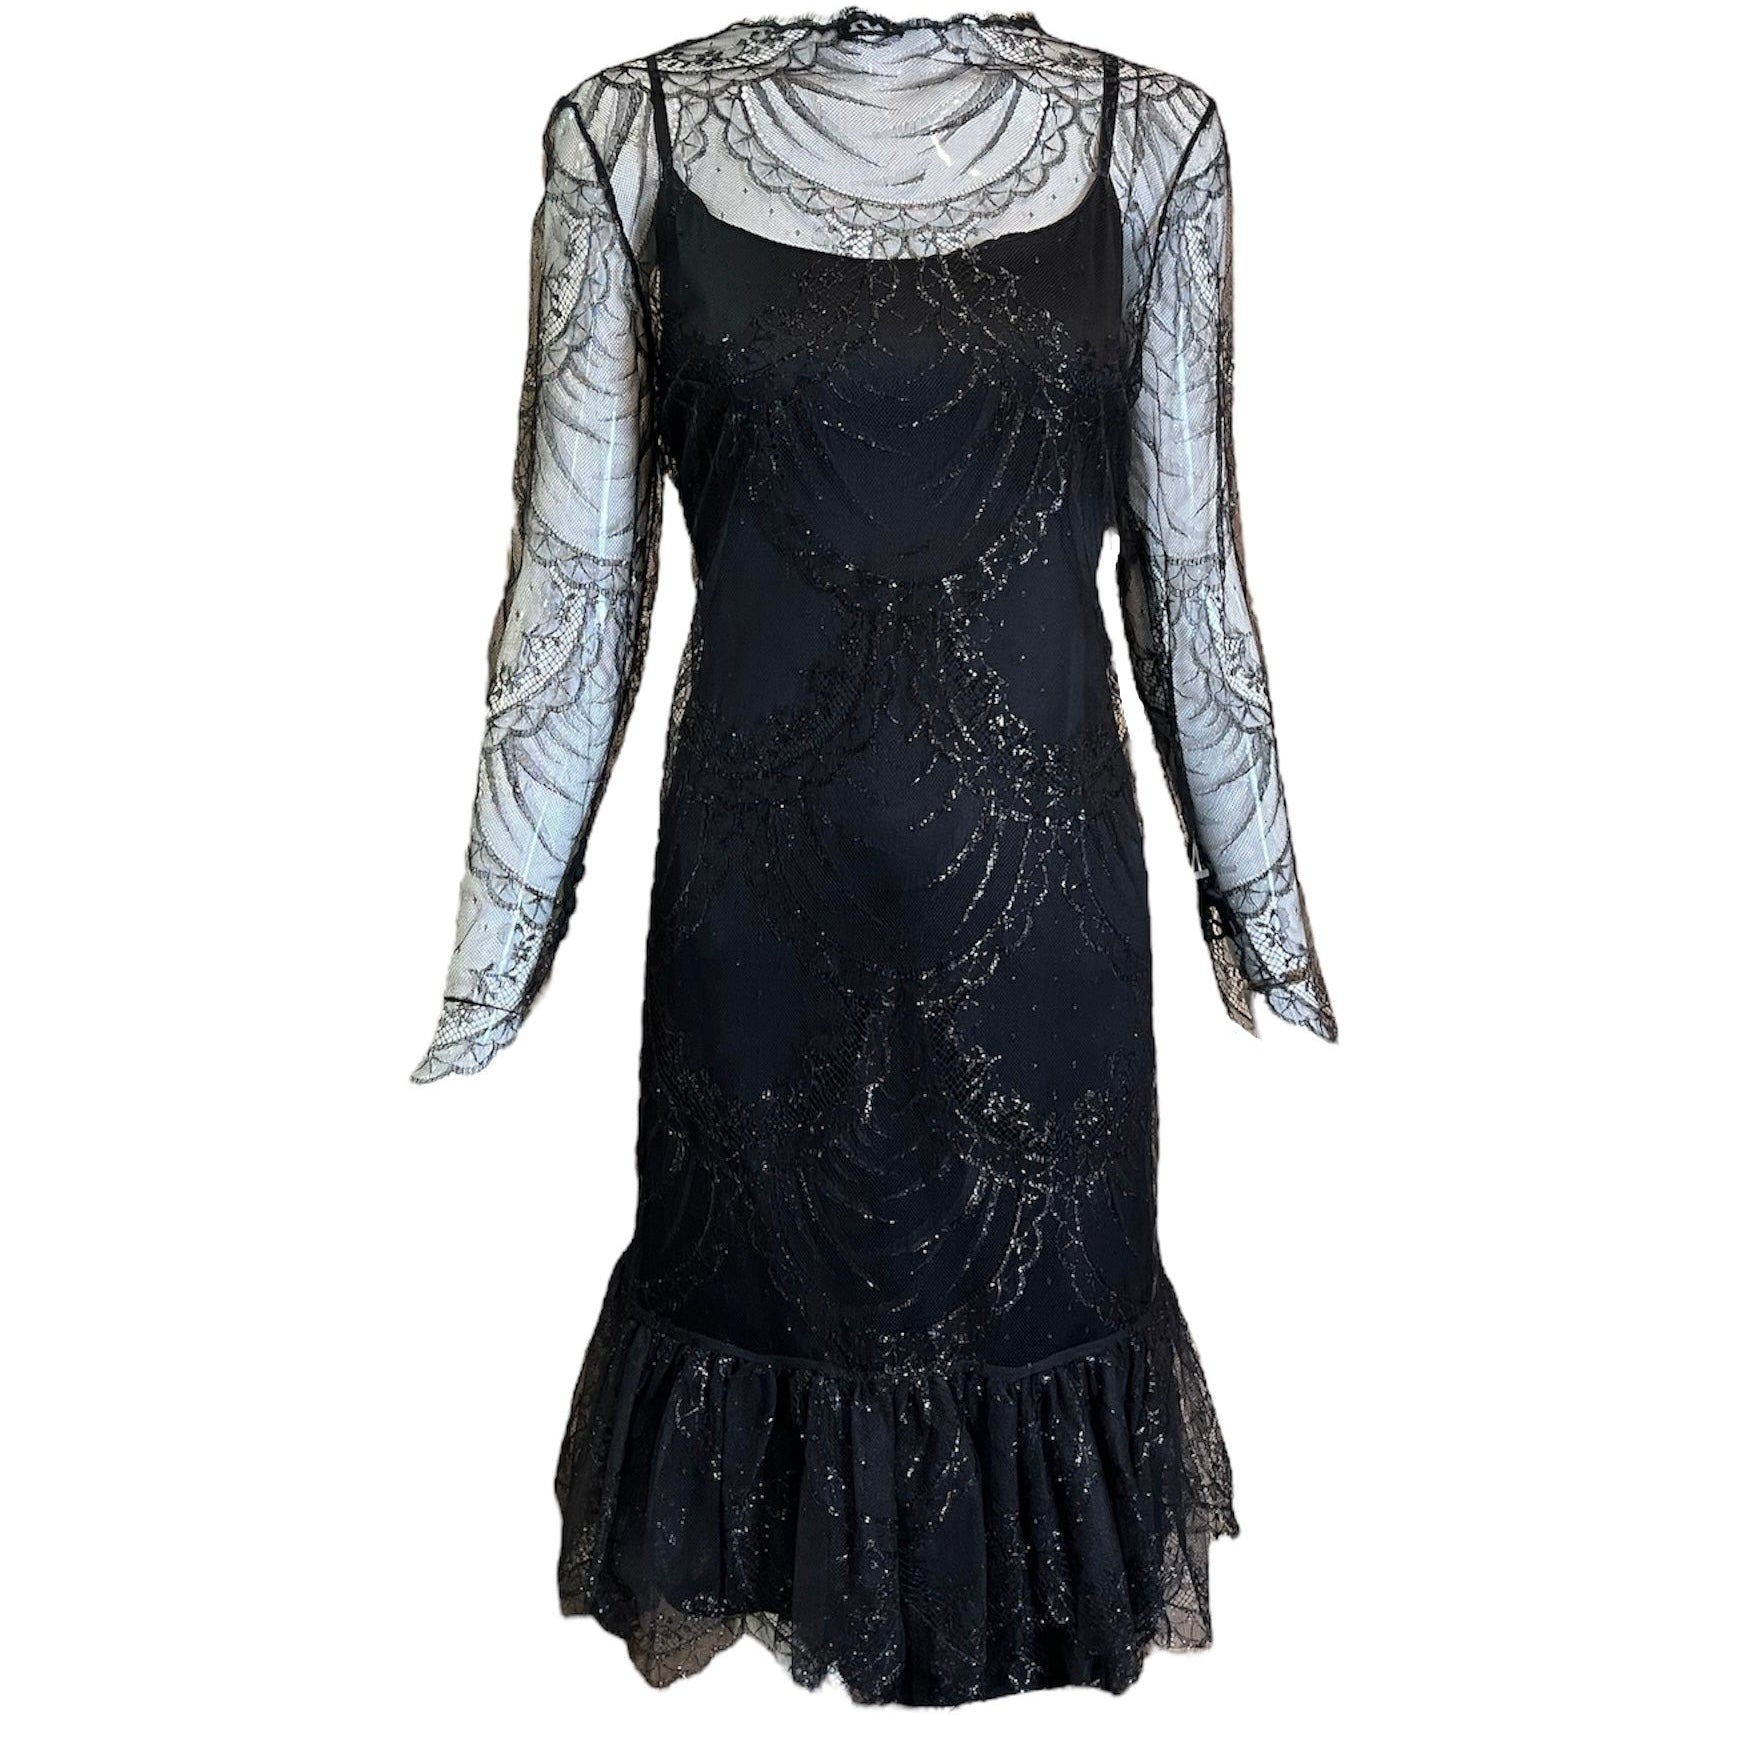 Bill Blass 80's Black Lace Dress w/ Slip FRONT 1 OF 4